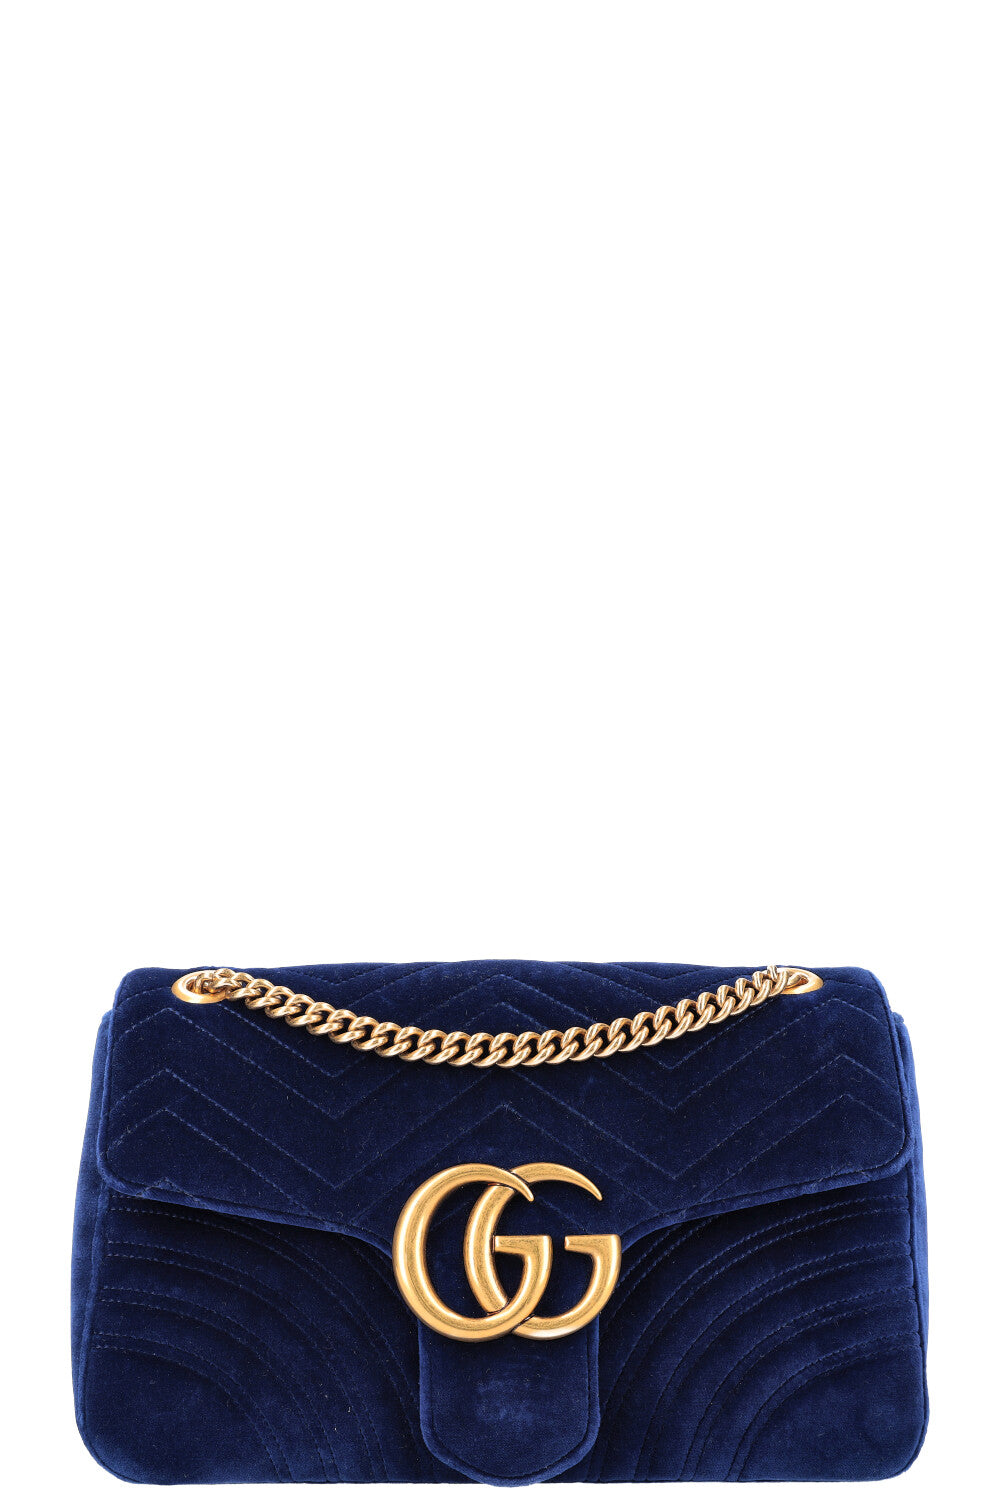 Gucci Marmont Velvet Blau 